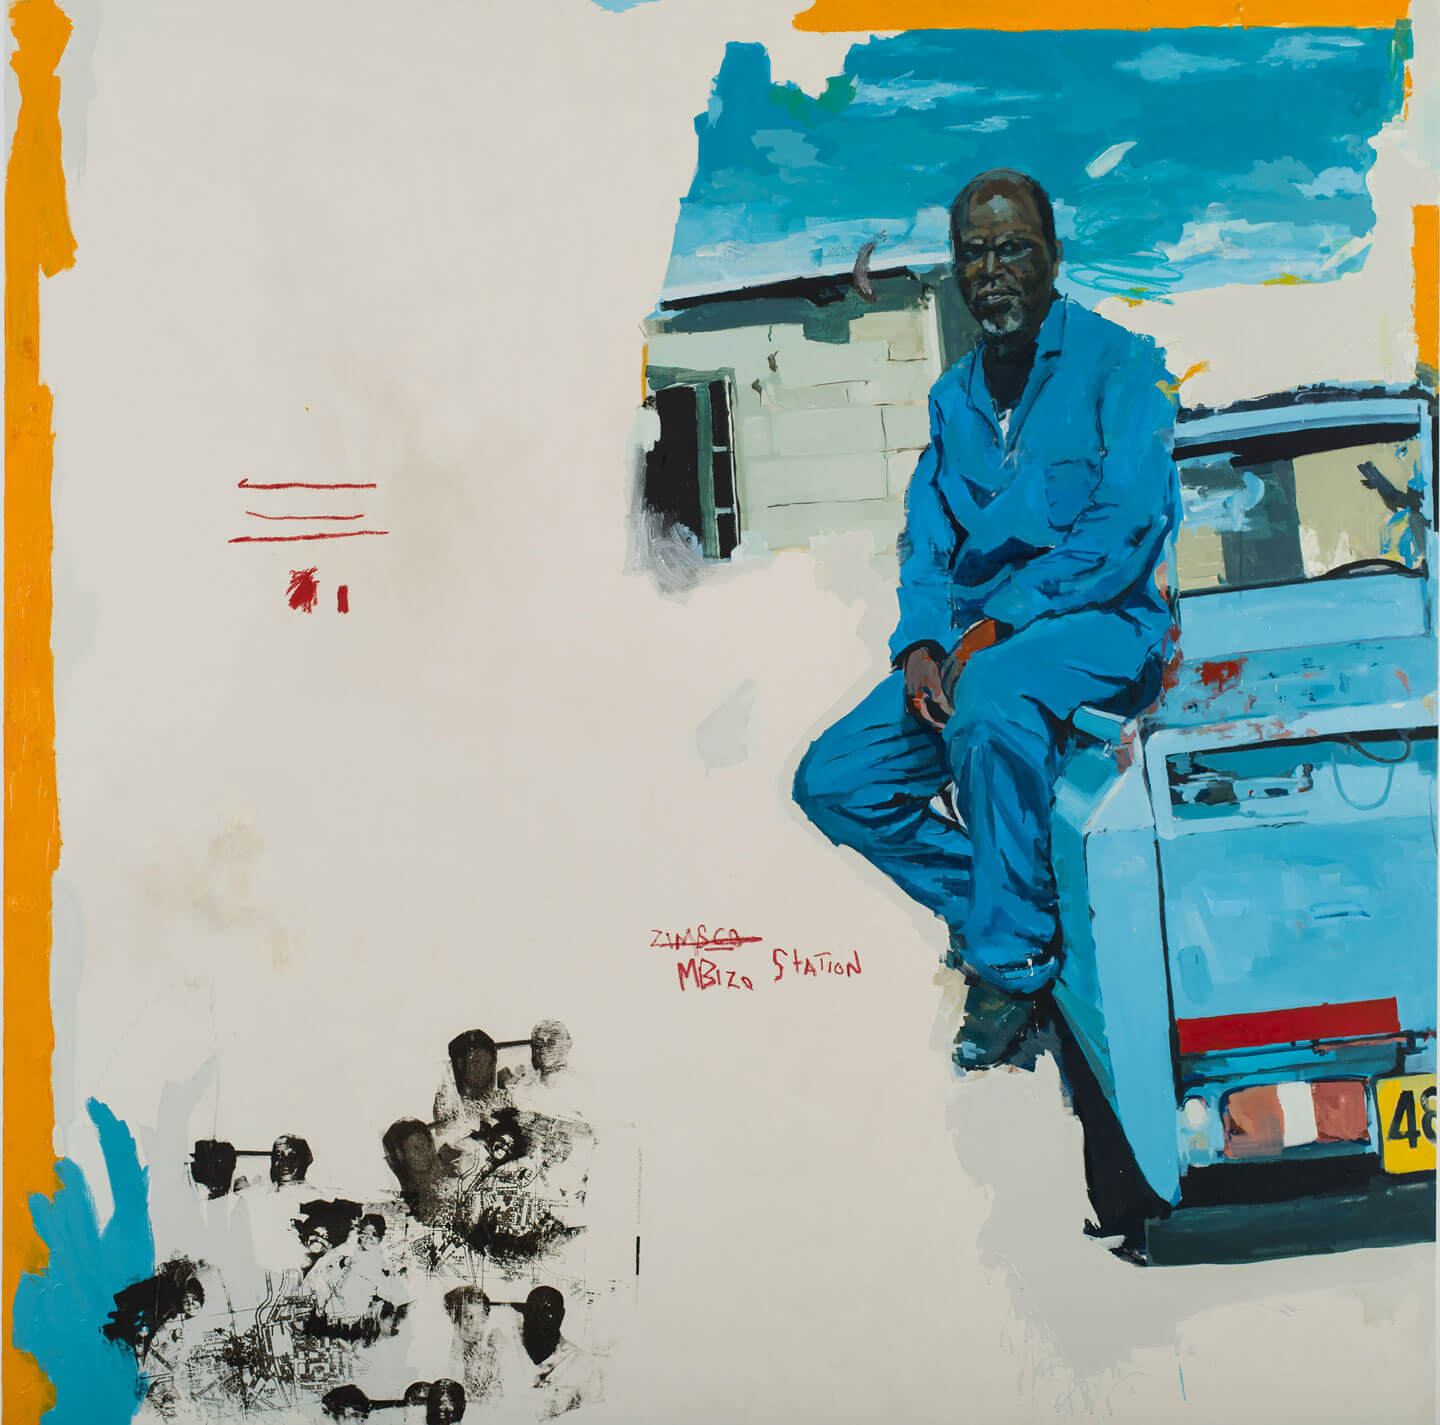 Kudzanai-Violet Hwami, Mbizo Station, 2017, painting